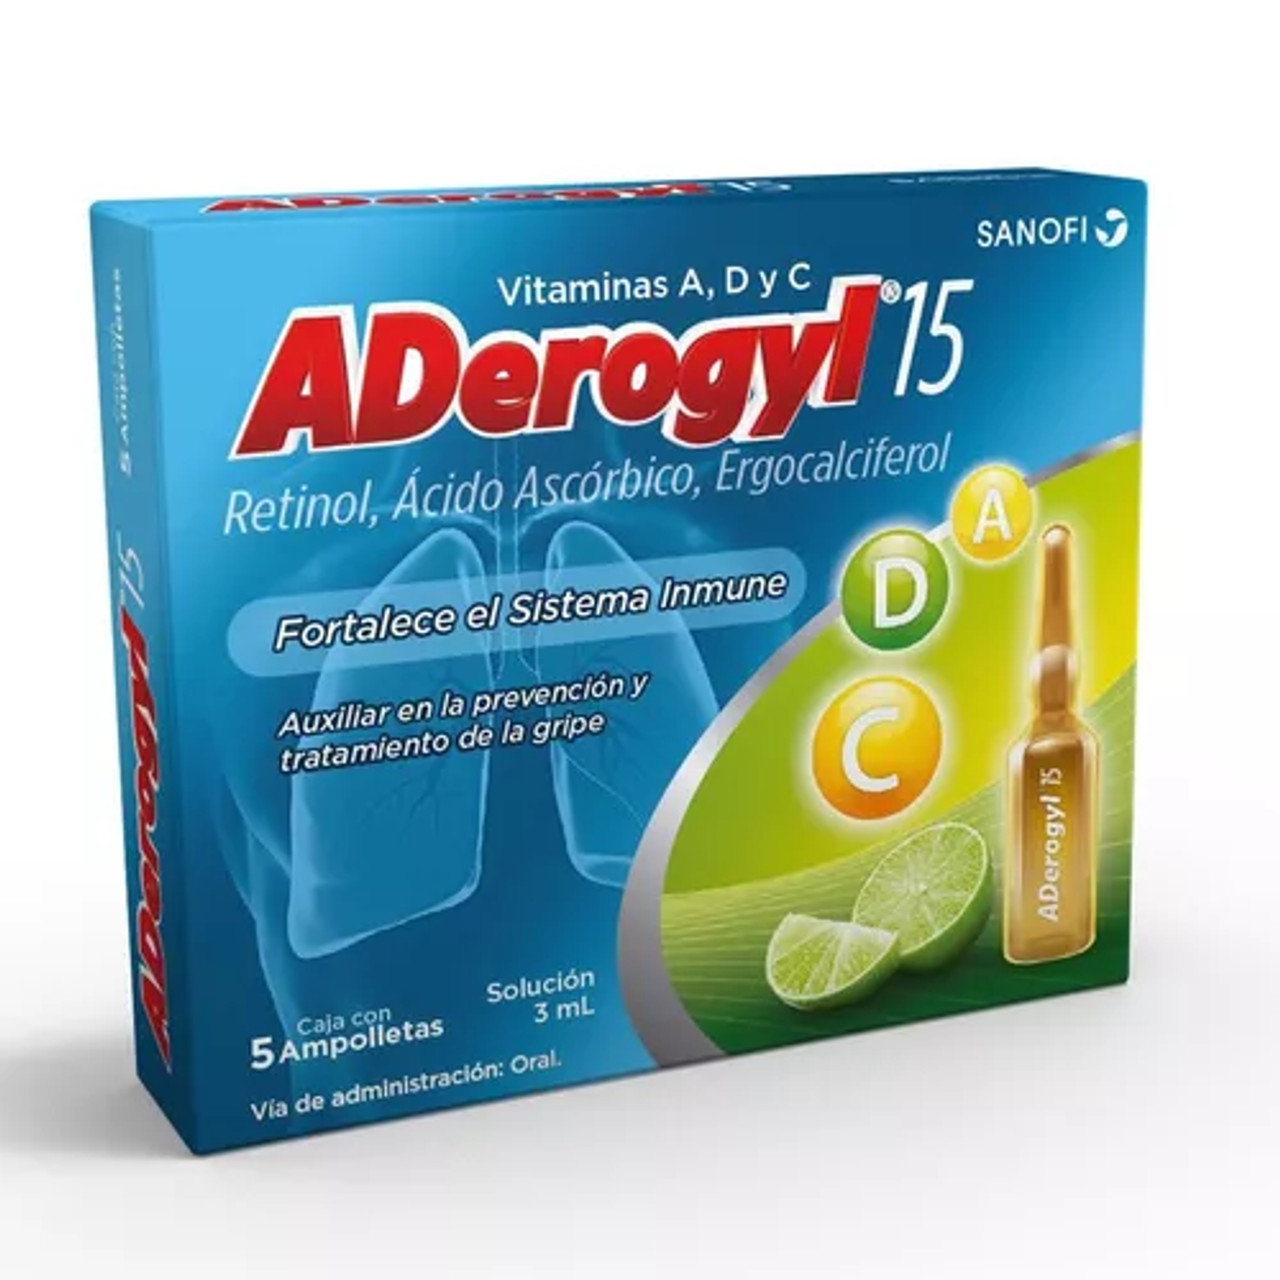 ADEROGYL 15 – Super Farmacia Universal